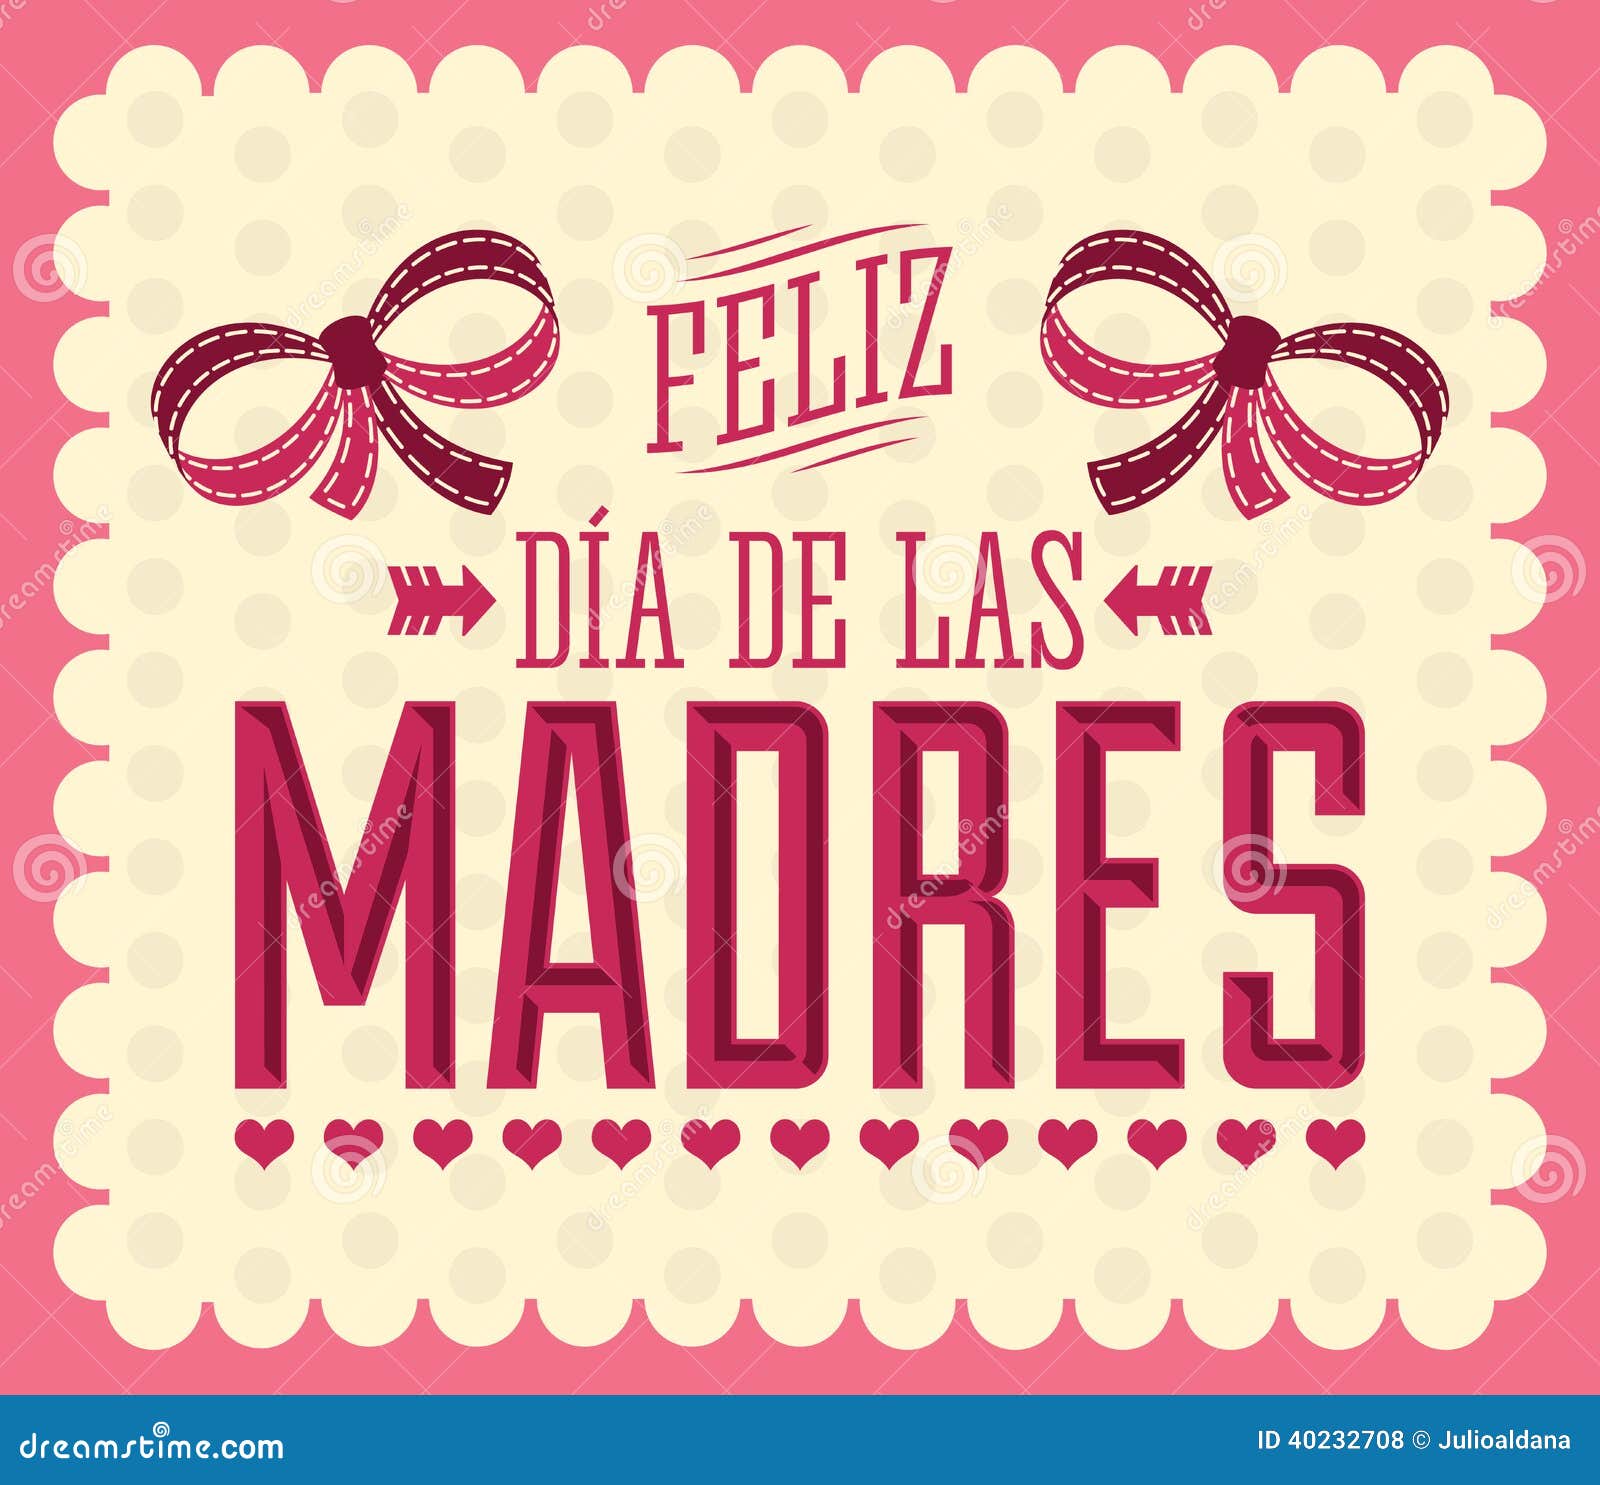 feliz dia de las madres, happy mother s day spanish text